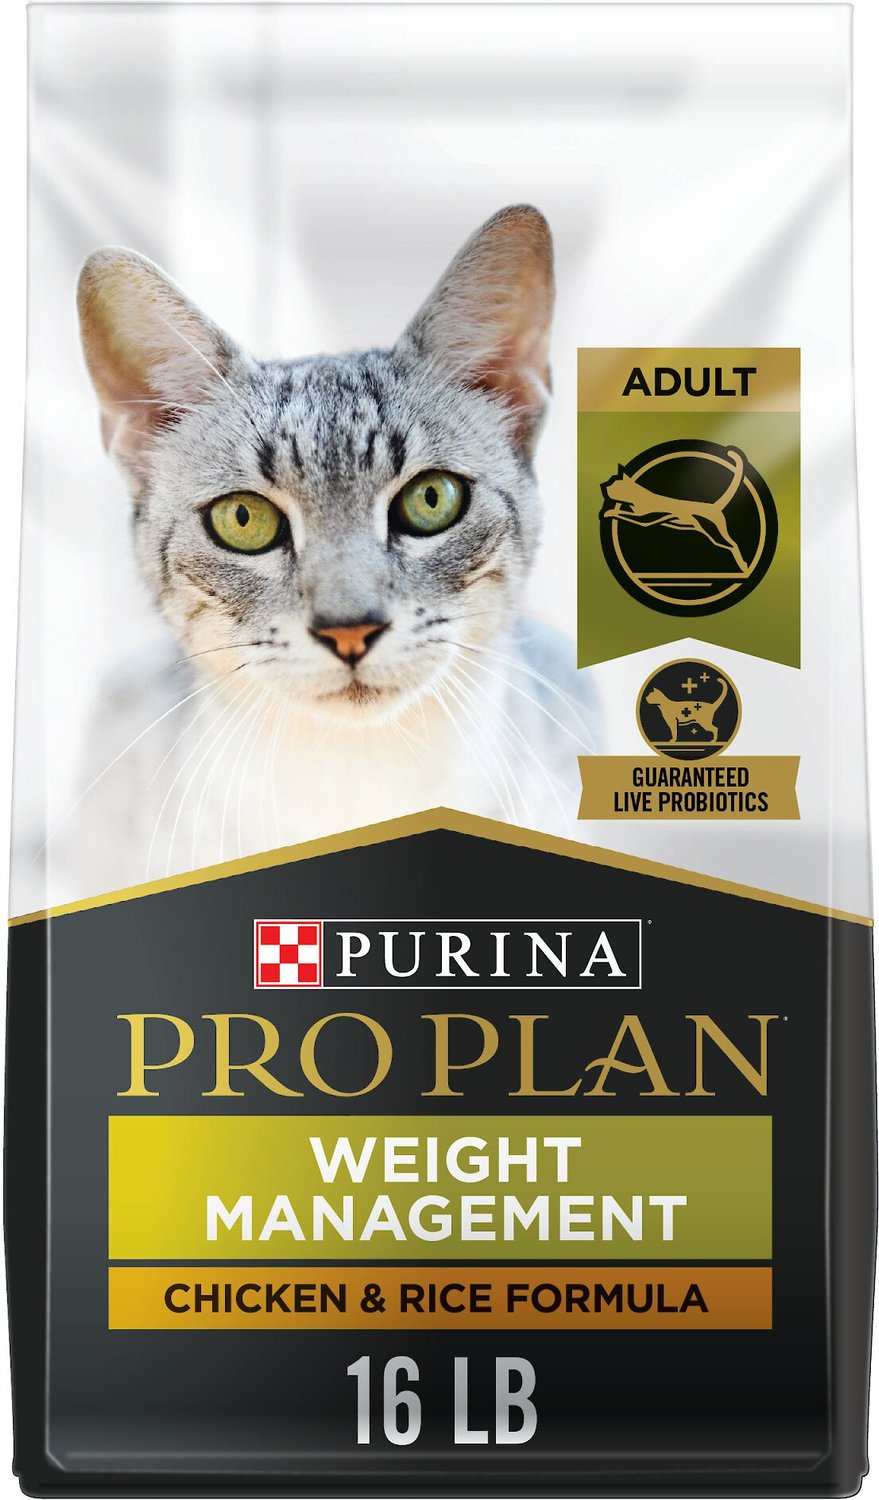 Purina Pro Plan Focus Adult Weight Management Chicken & Rice Formula